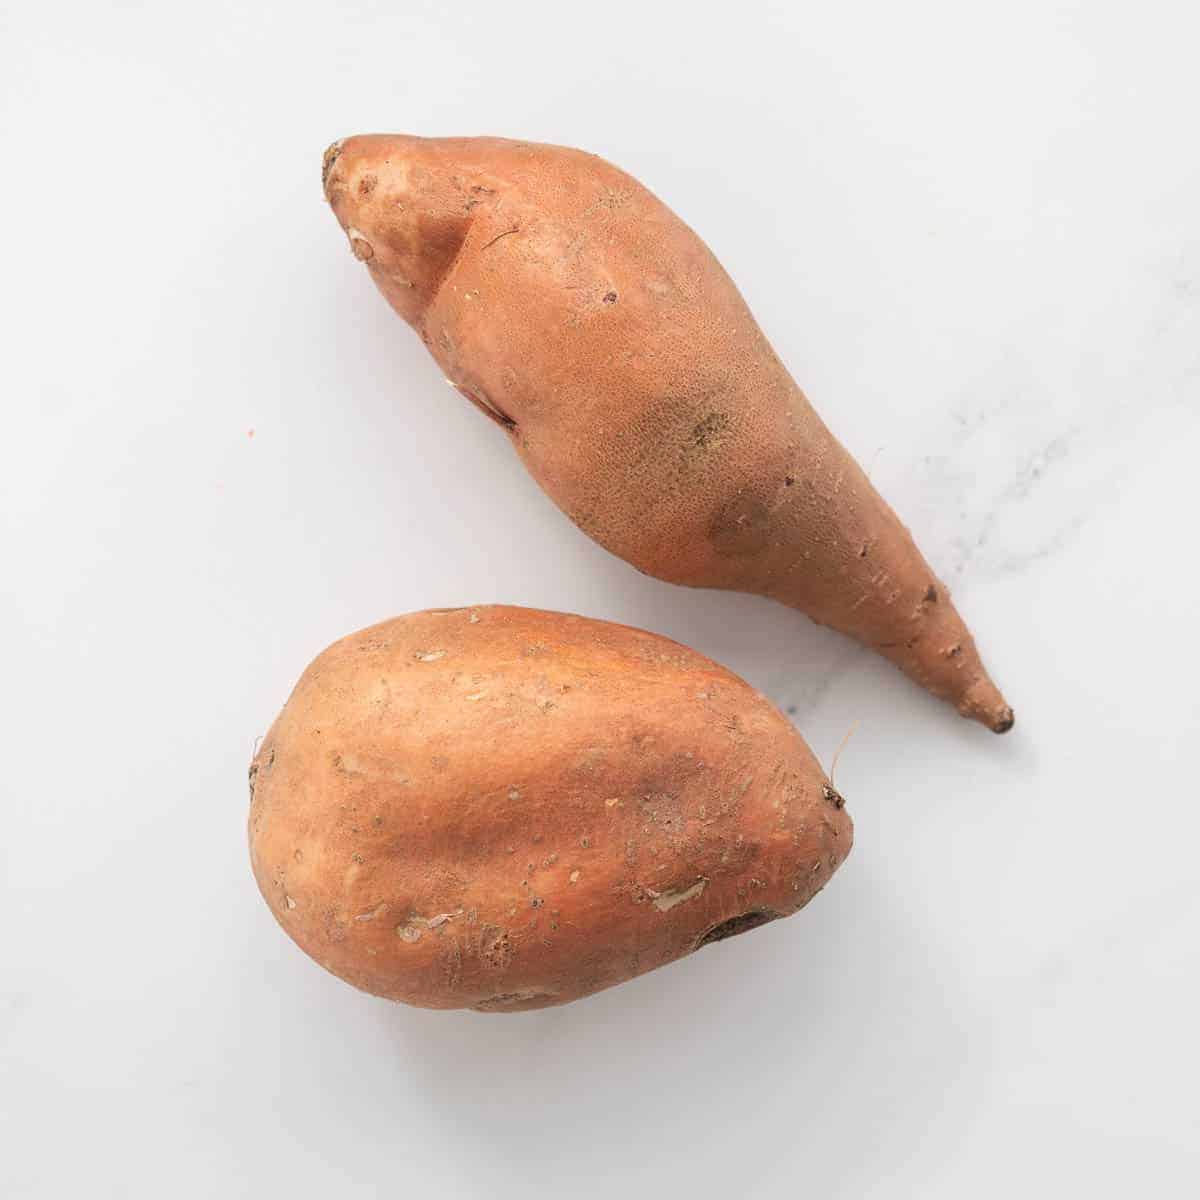 two whole sweet potato